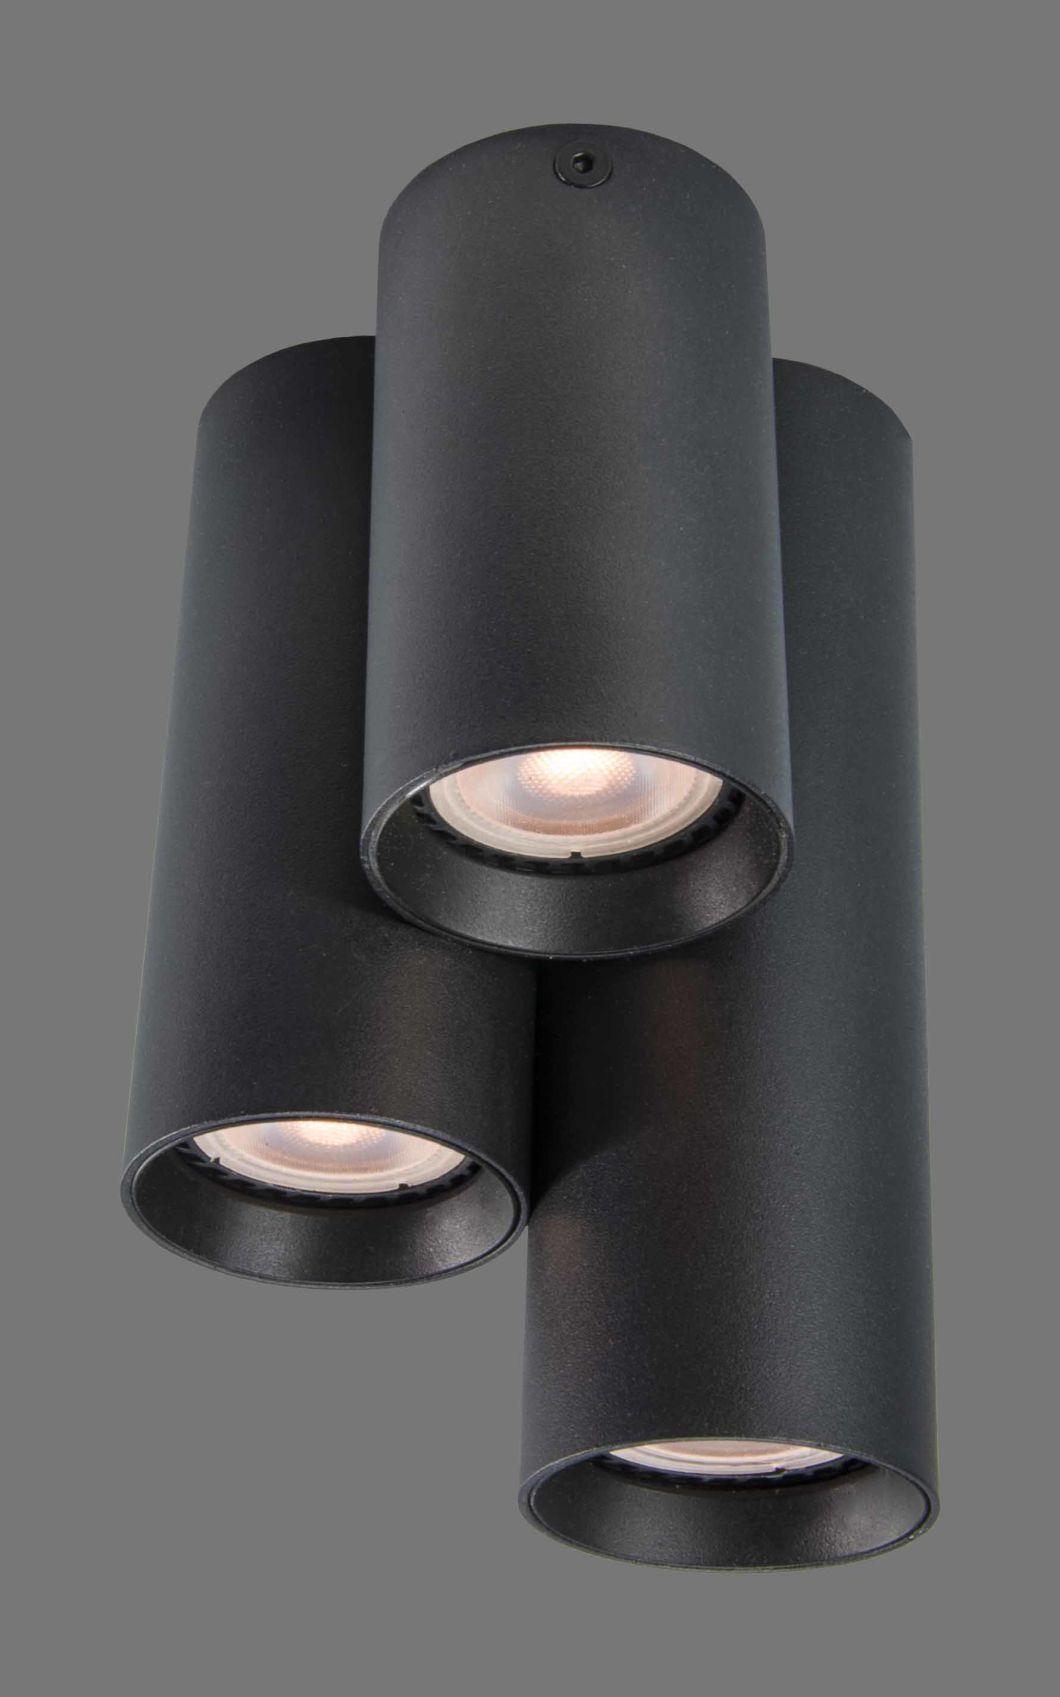 Hot Sale Nordic Design Surface Mounted Downlight Ceiling Aluminium GU10 Black White Spotlight Fixture LED Lamp for Indoor